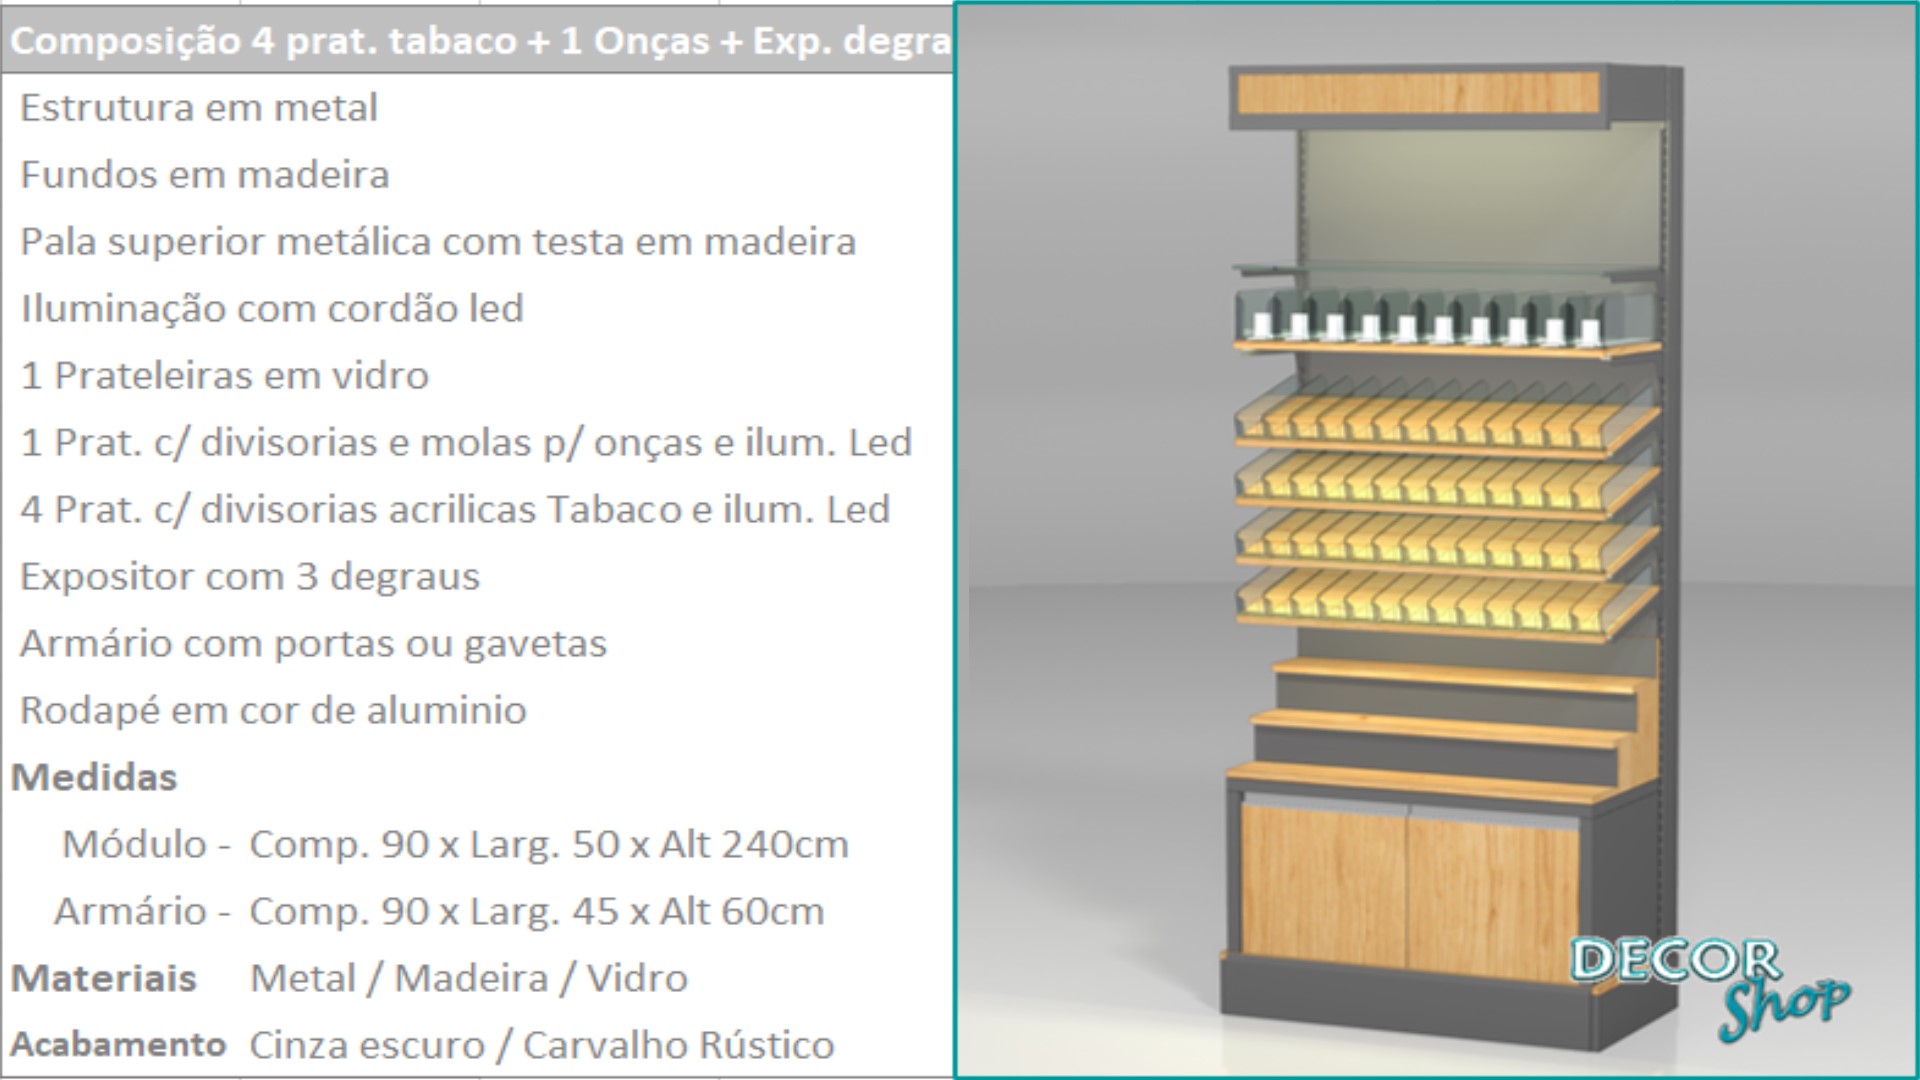 8 - Mod 4 prateleiras tabaco onças expo degraus